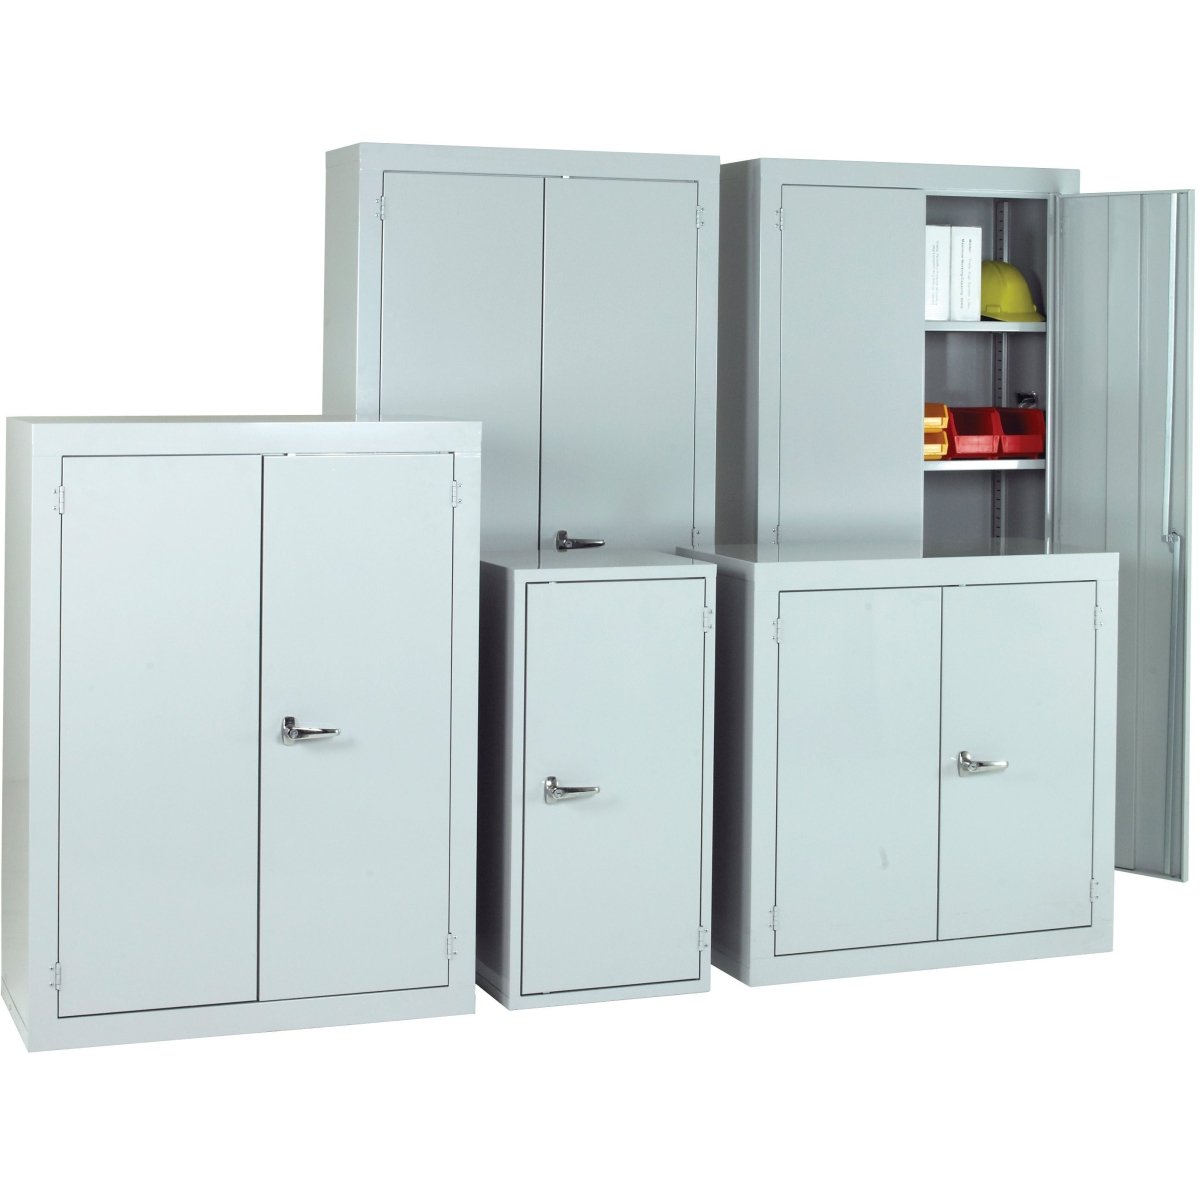 Redditek CB Cupboard With Adjustable Shelf (5 Models) - Warehouse Storage Products